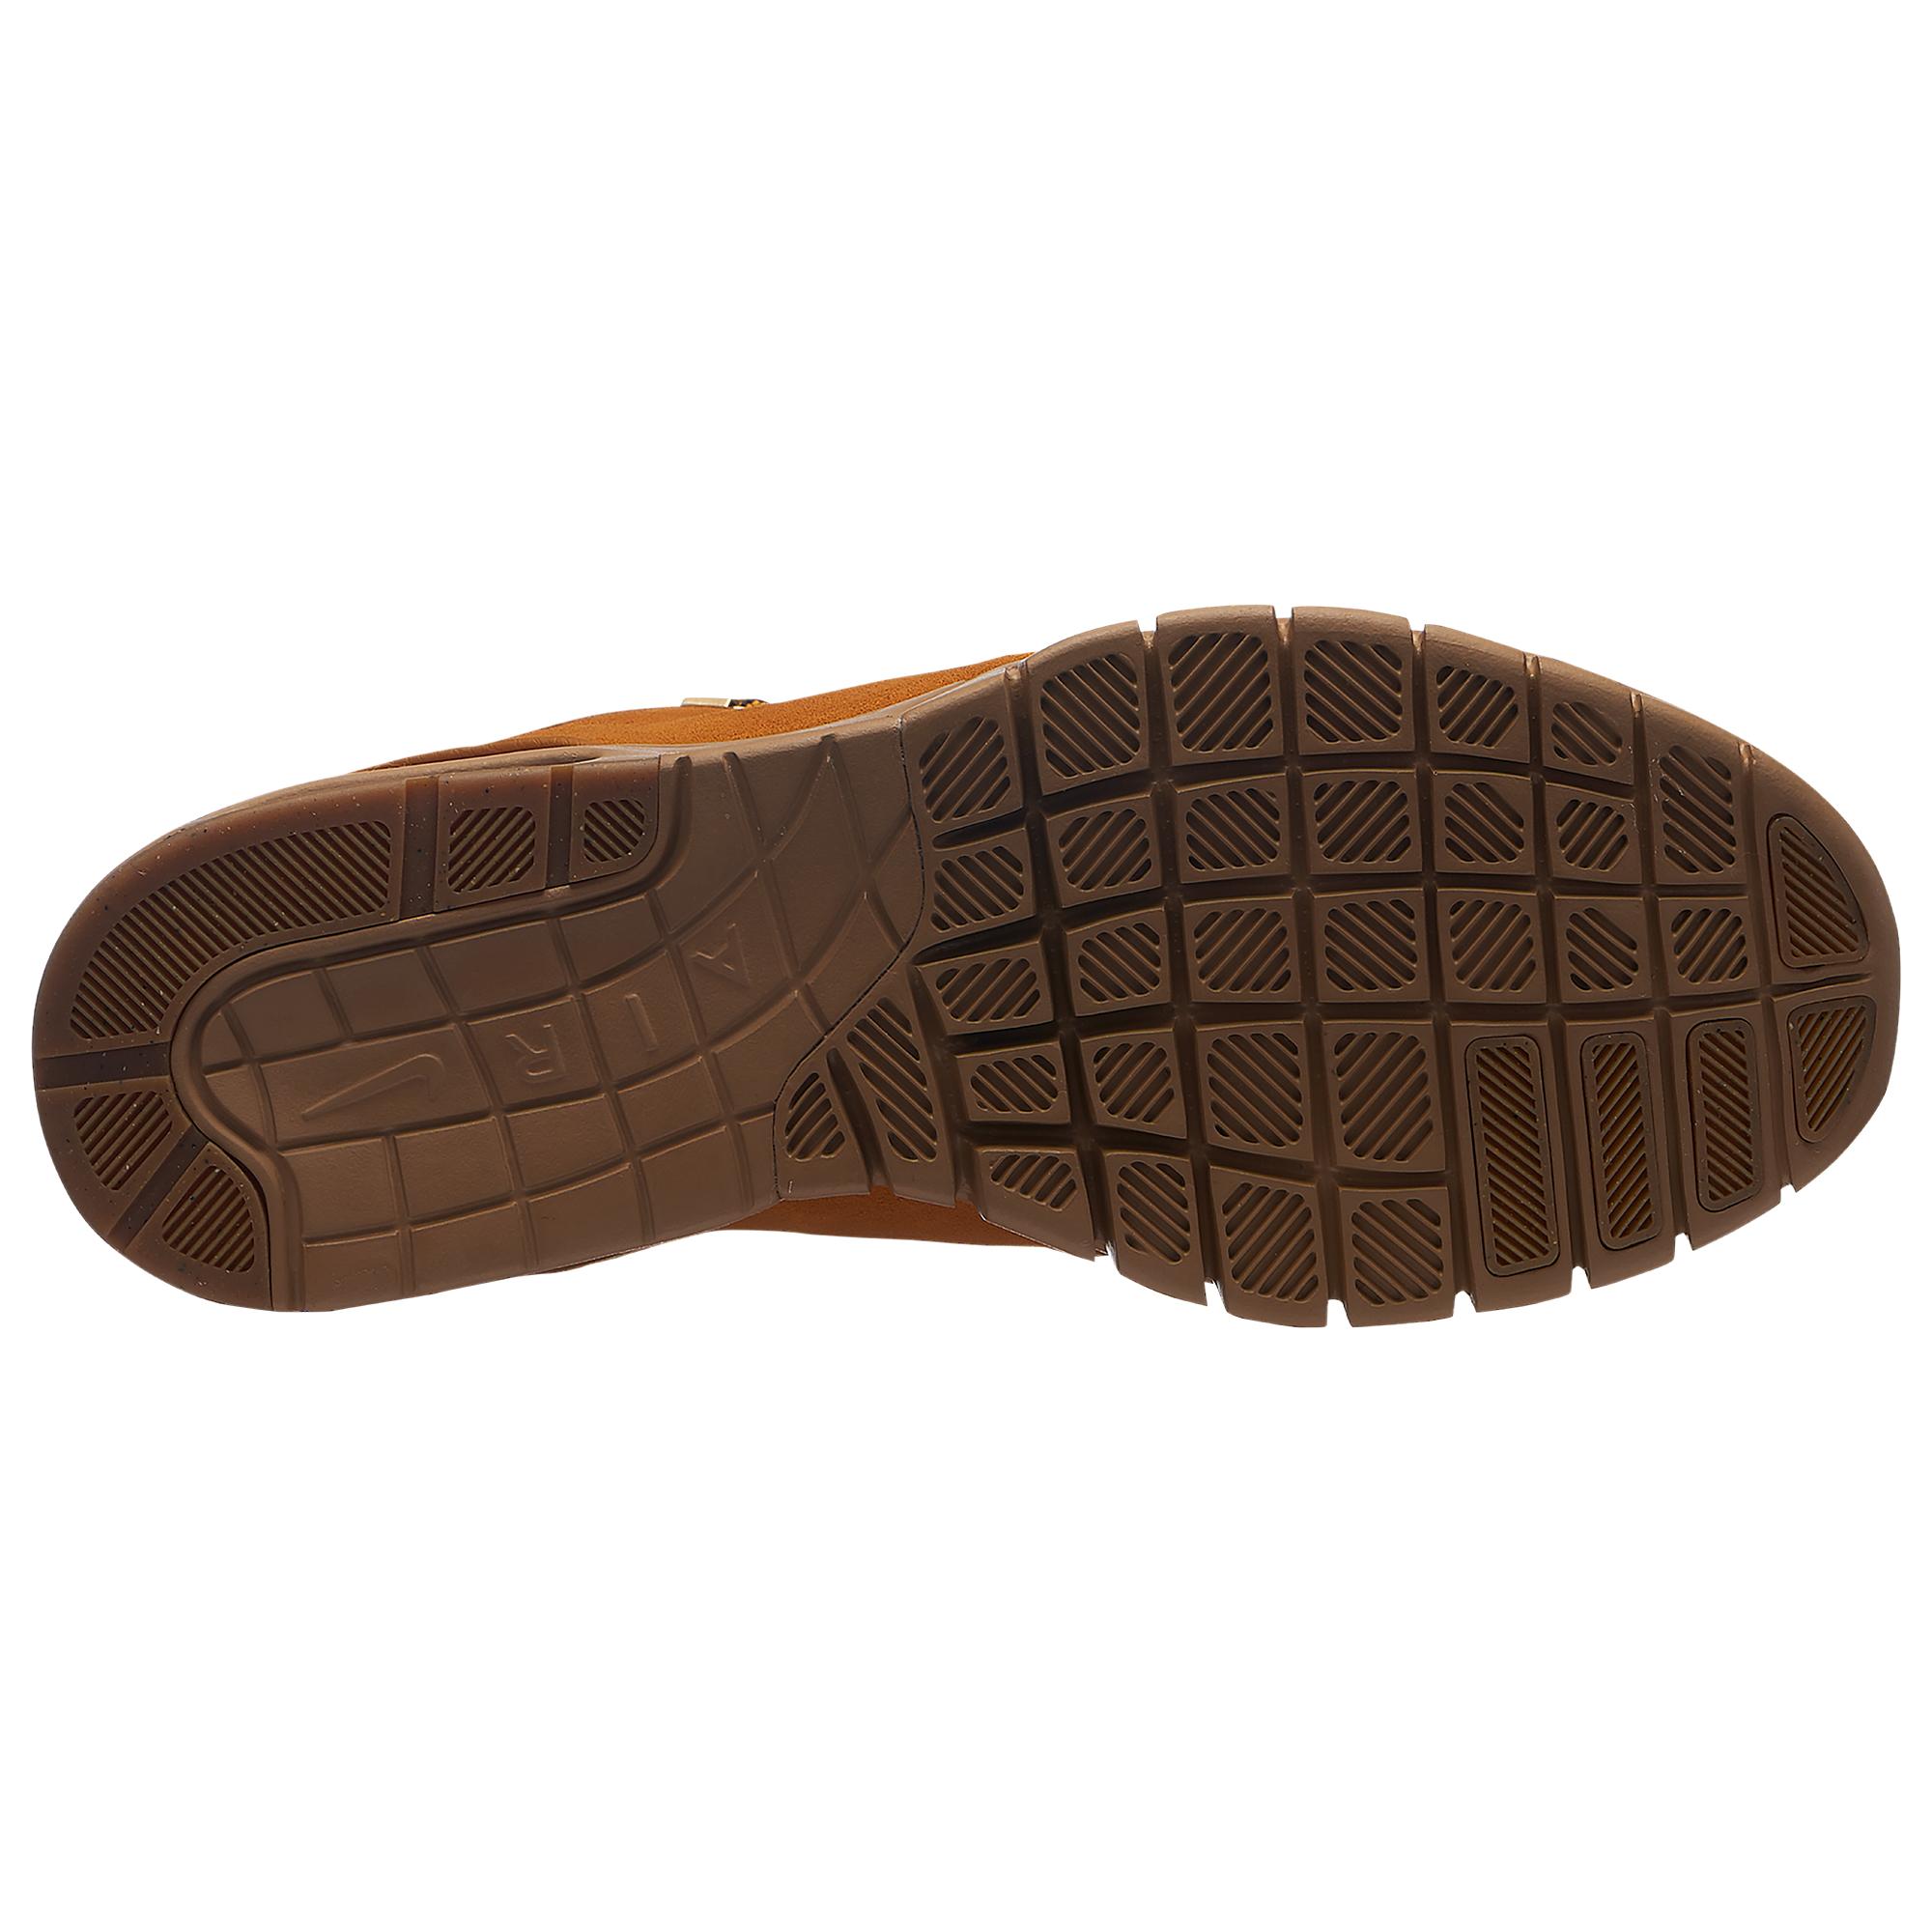 Nike Sb Stefan Janoski Max Mid Premium Skate Shoe in Bronze (Brown) for Men  - Lyst